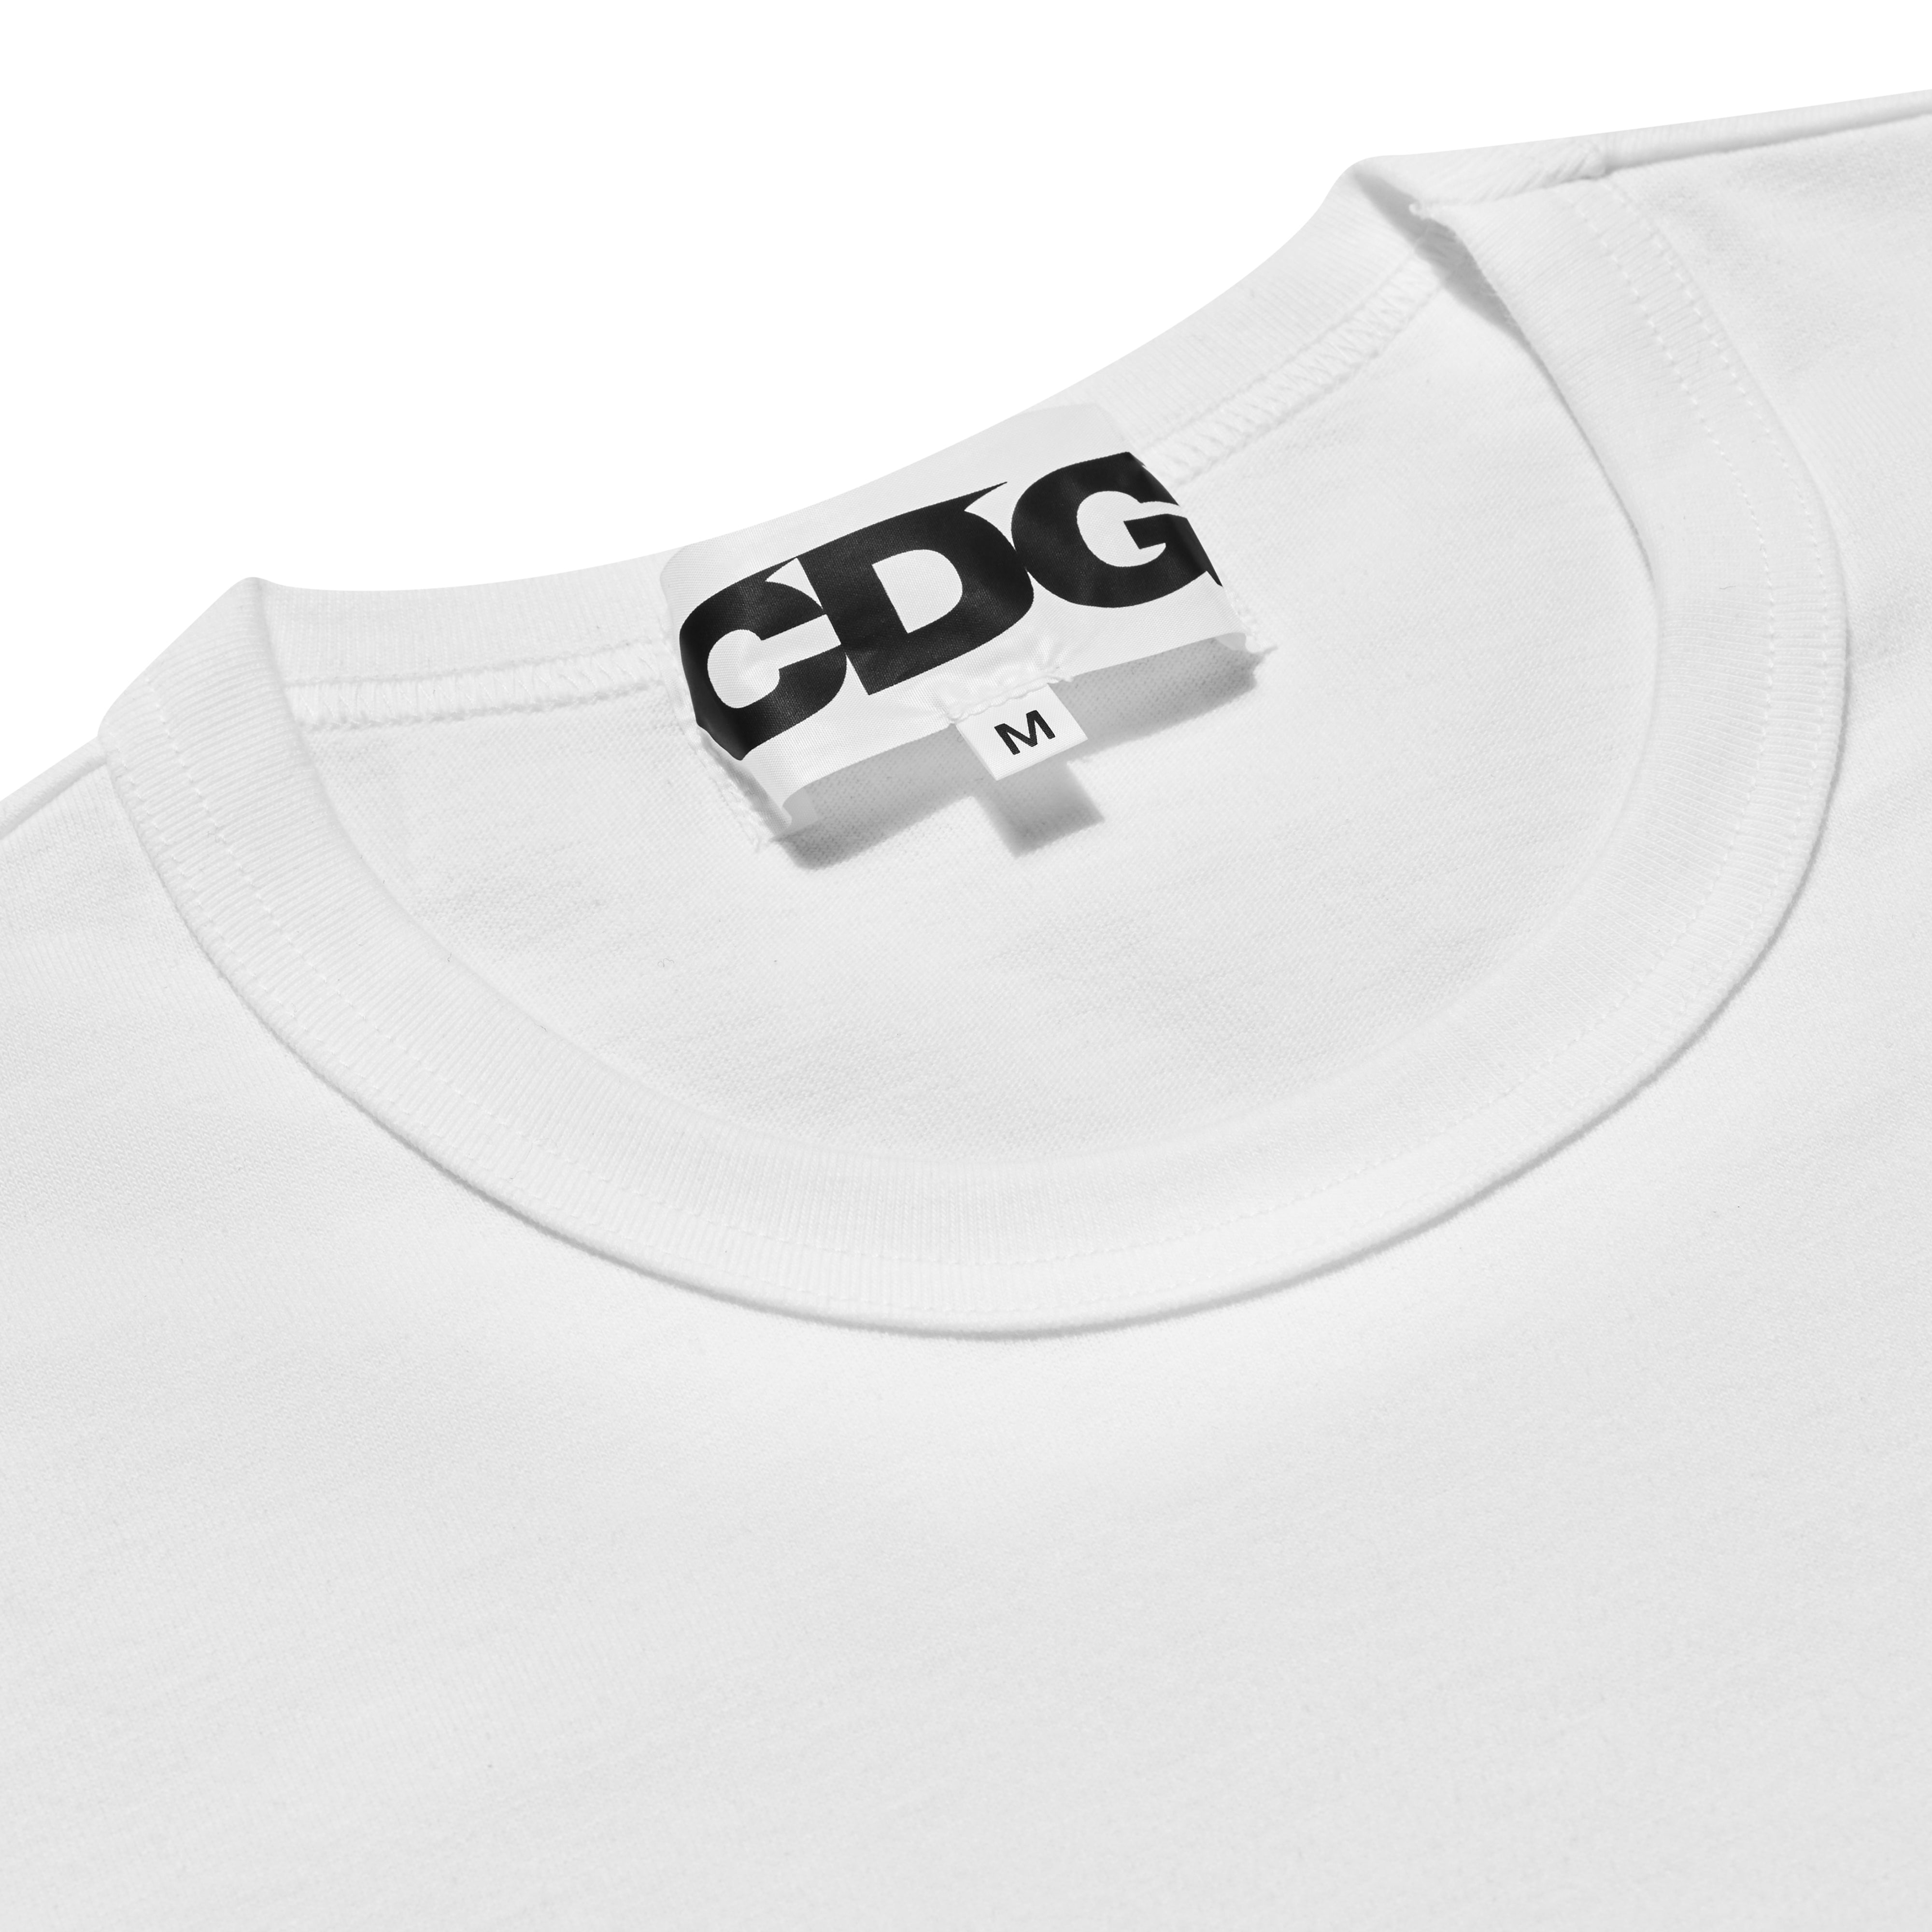 CDG◇FLUORESCENT PRINTED T-SHIRT/AD2020/Tシャツ/L/コットン/BLK/sz ...